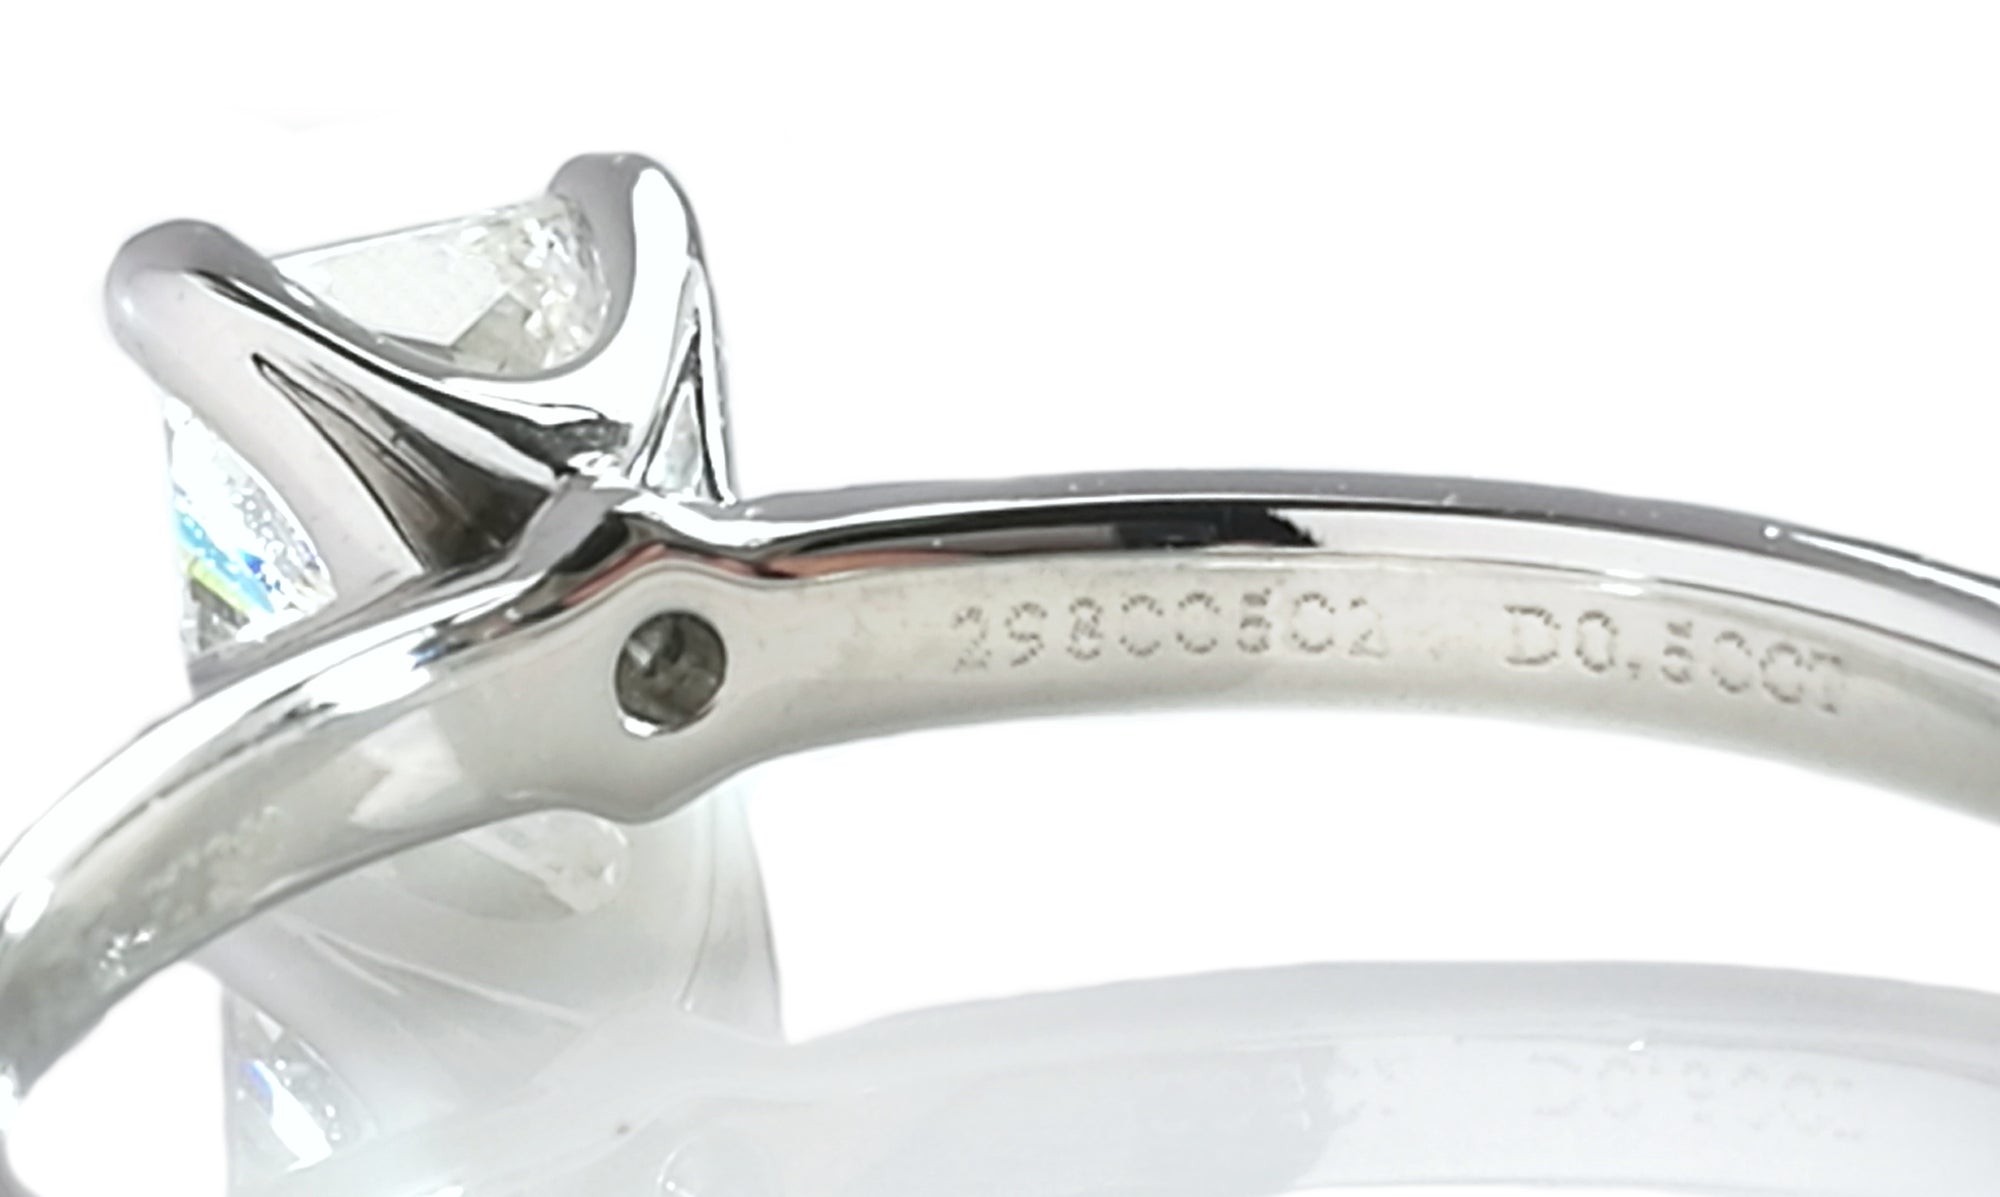 Tiffany & Co. 0.50ct G/VVS1 Triple-X Princess Cut Diamond Engagement Ring